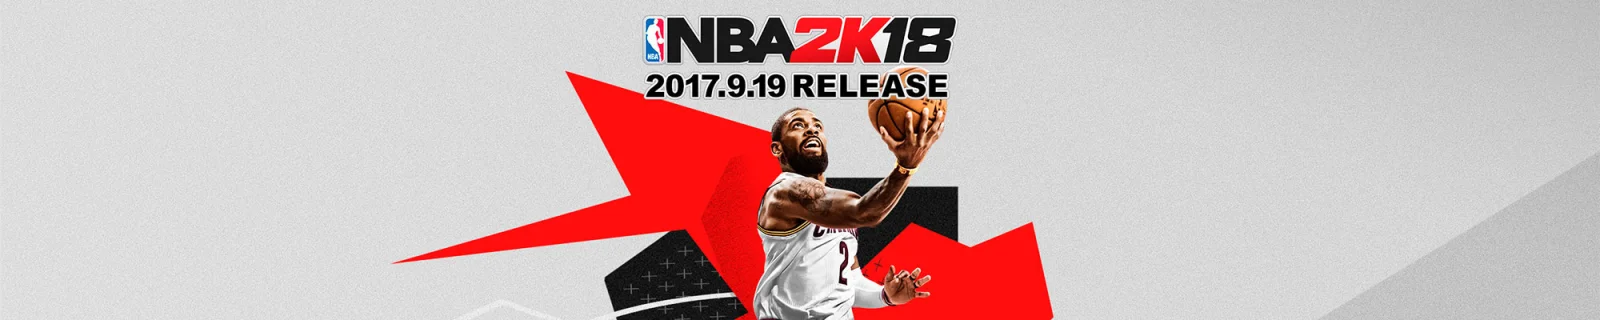 《NBA 2K18》9月19日发售